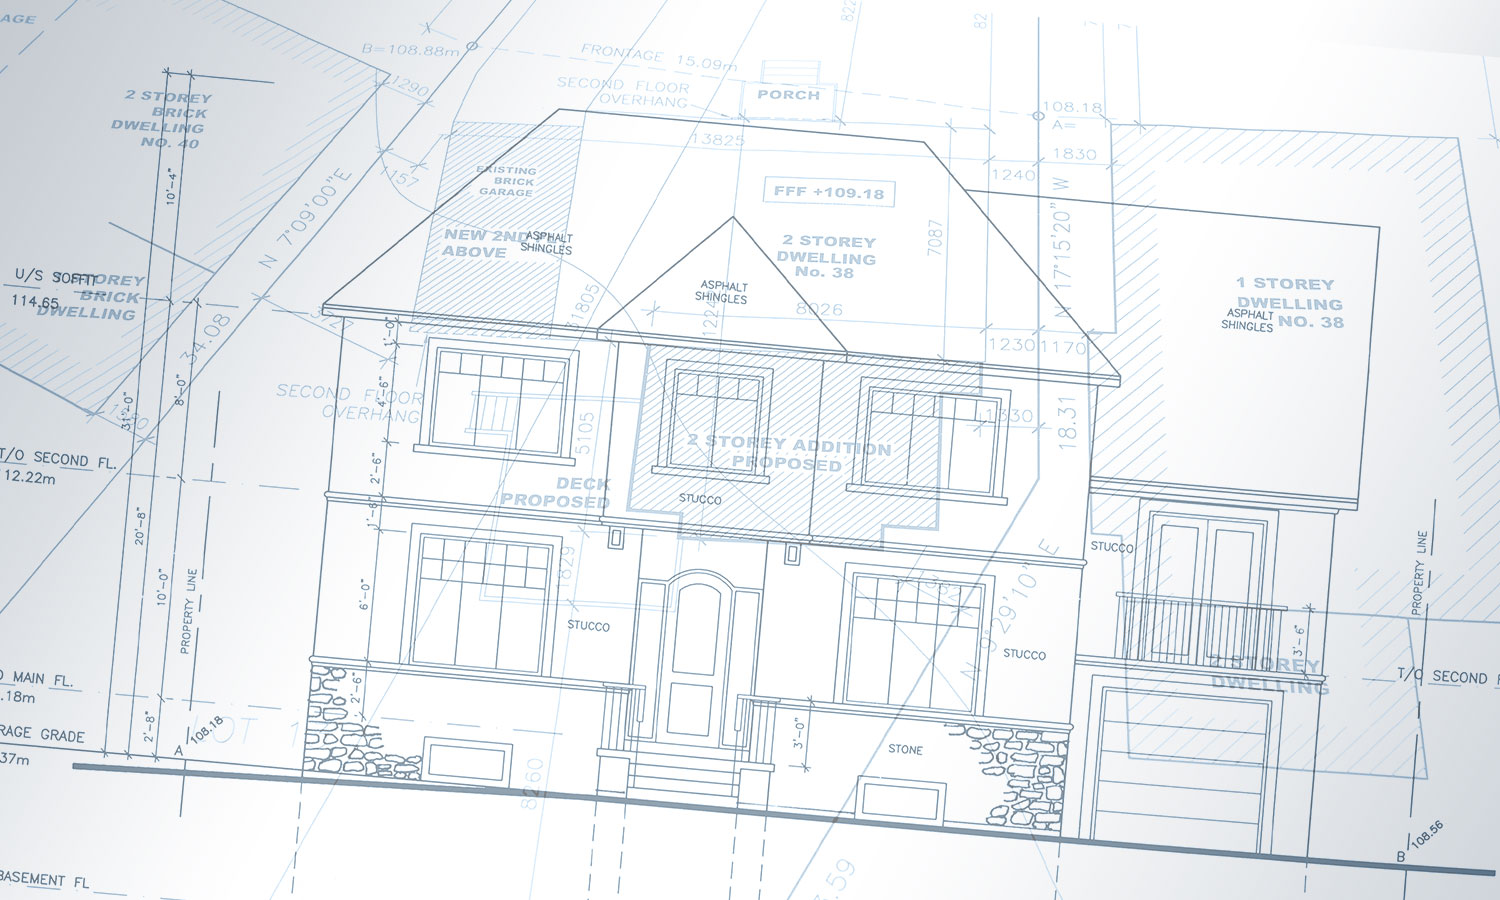 Blueprints for a house